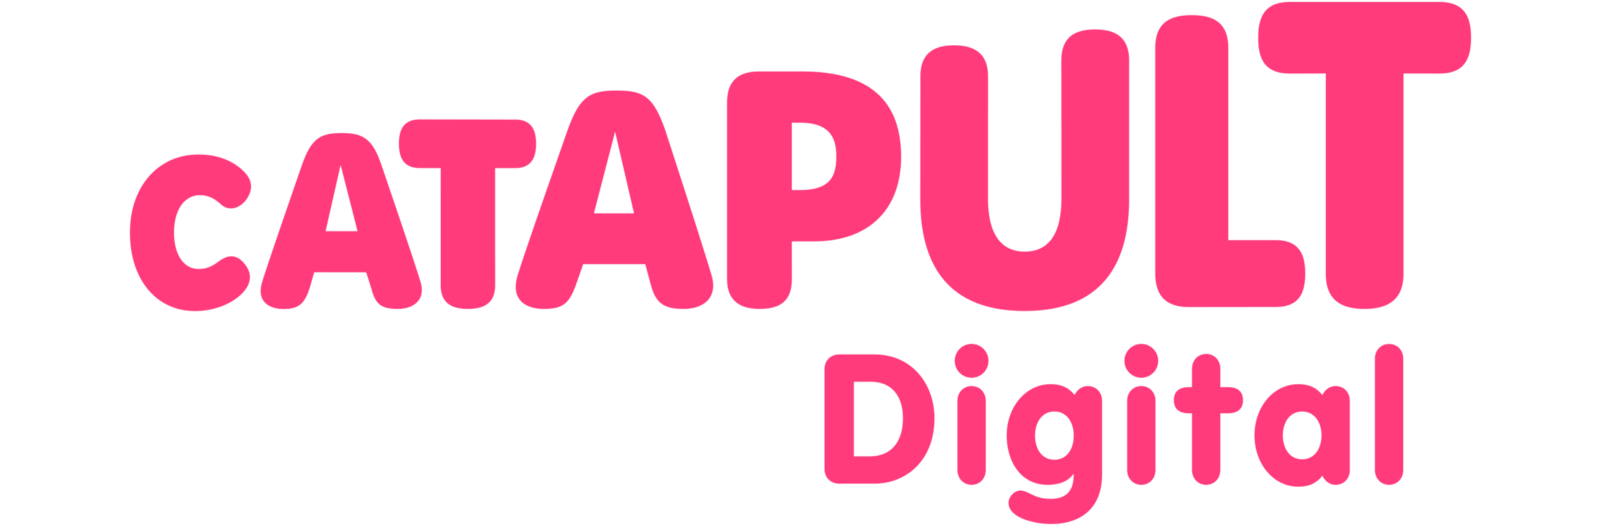 Digital Catapult Logo